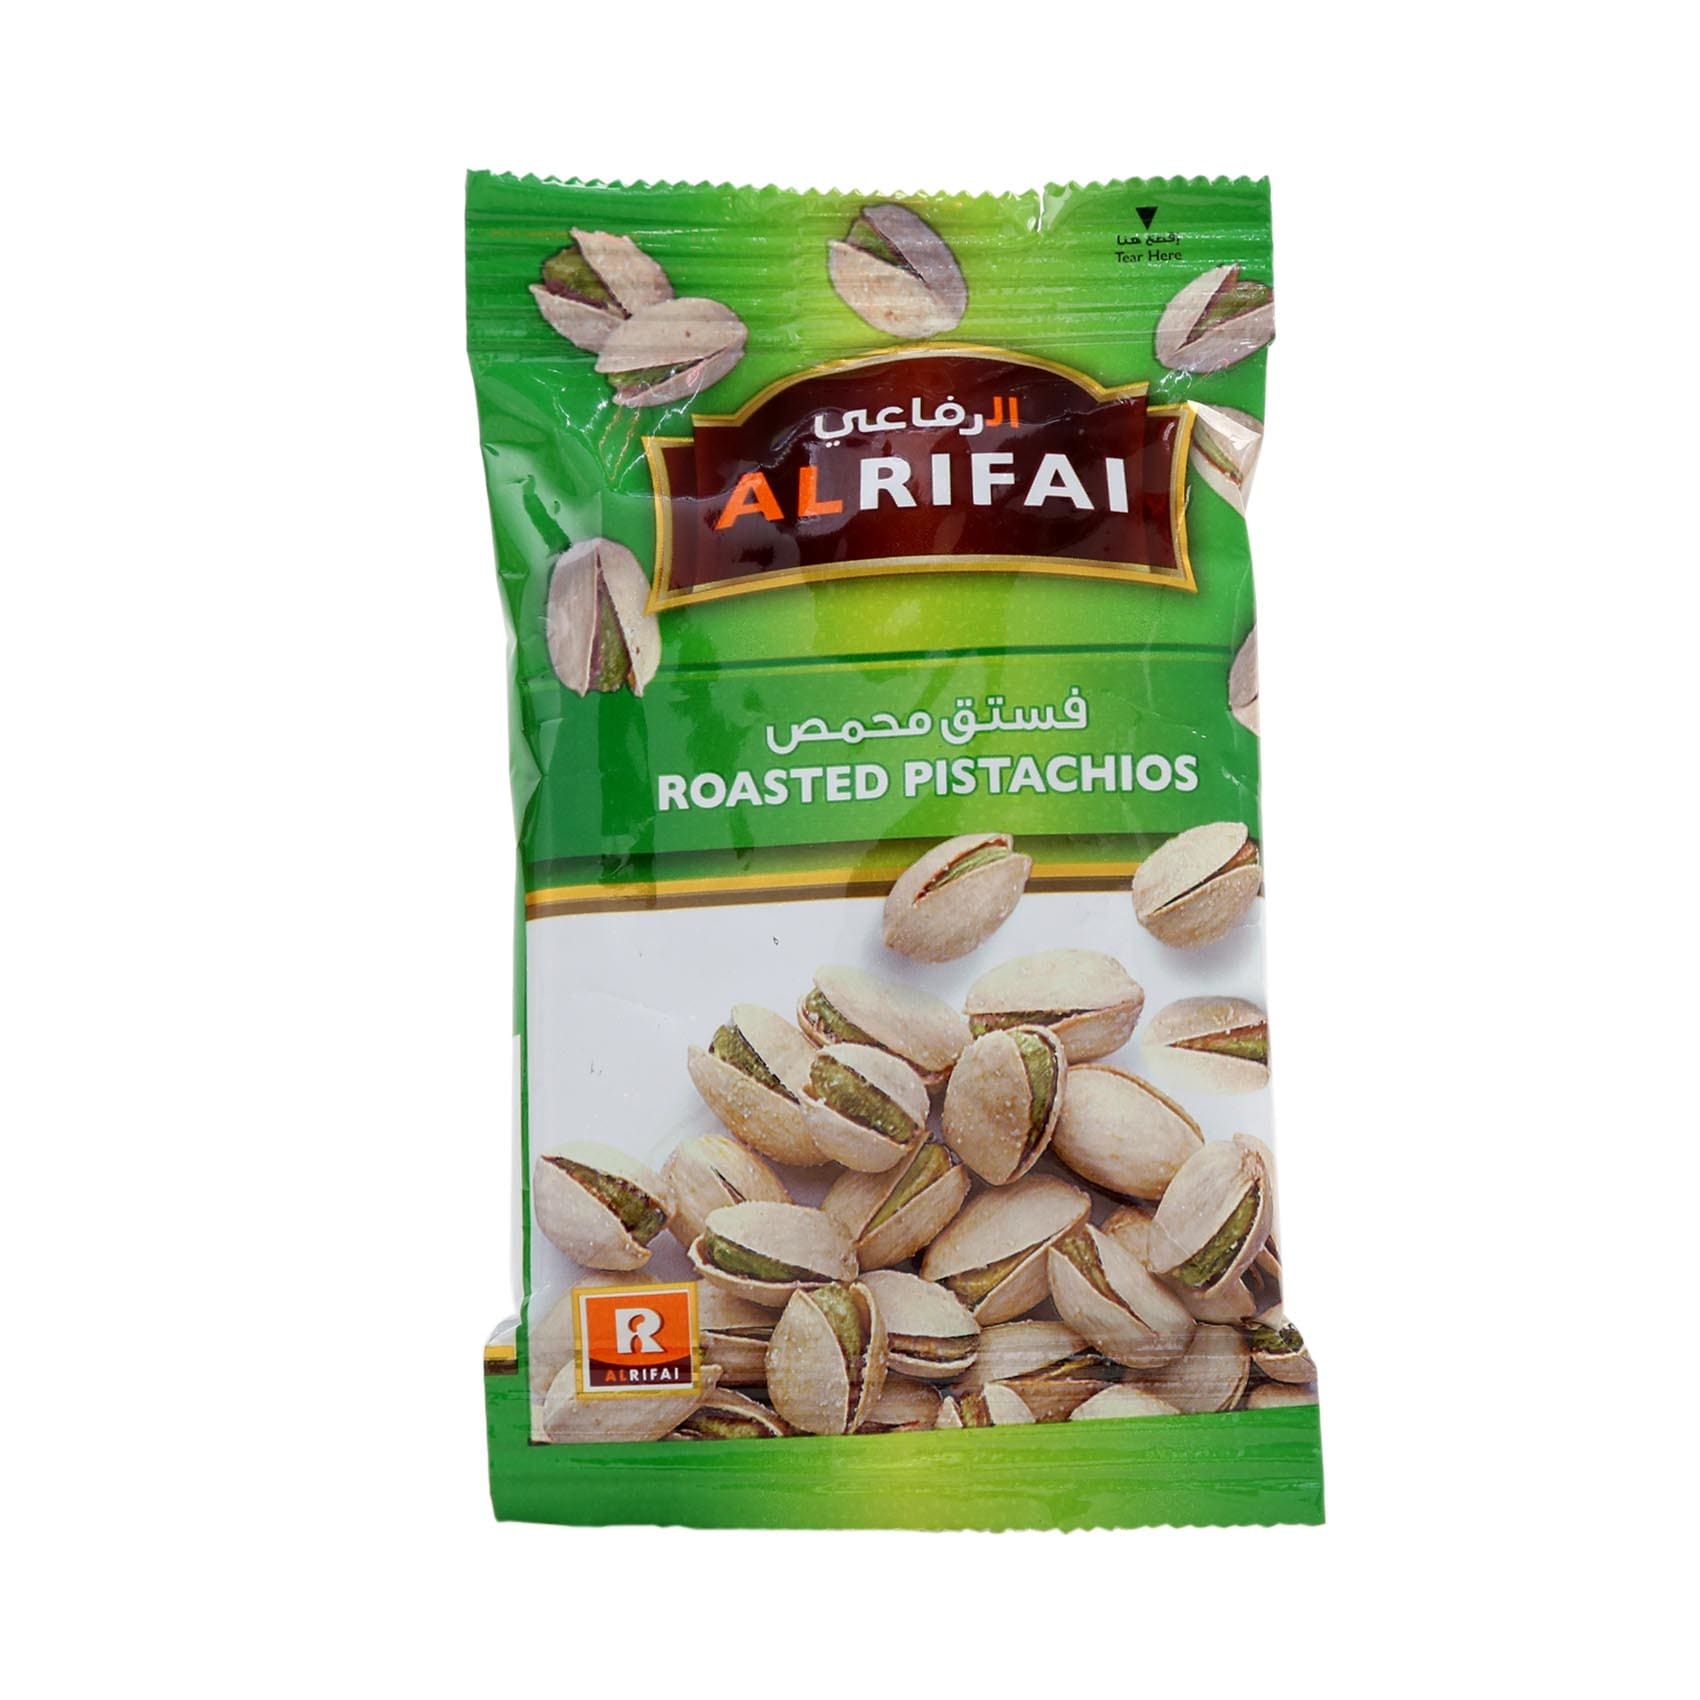 Buy Krikita Happy Hour Cup of Pistachios & Almonds 45 g Online in UAE